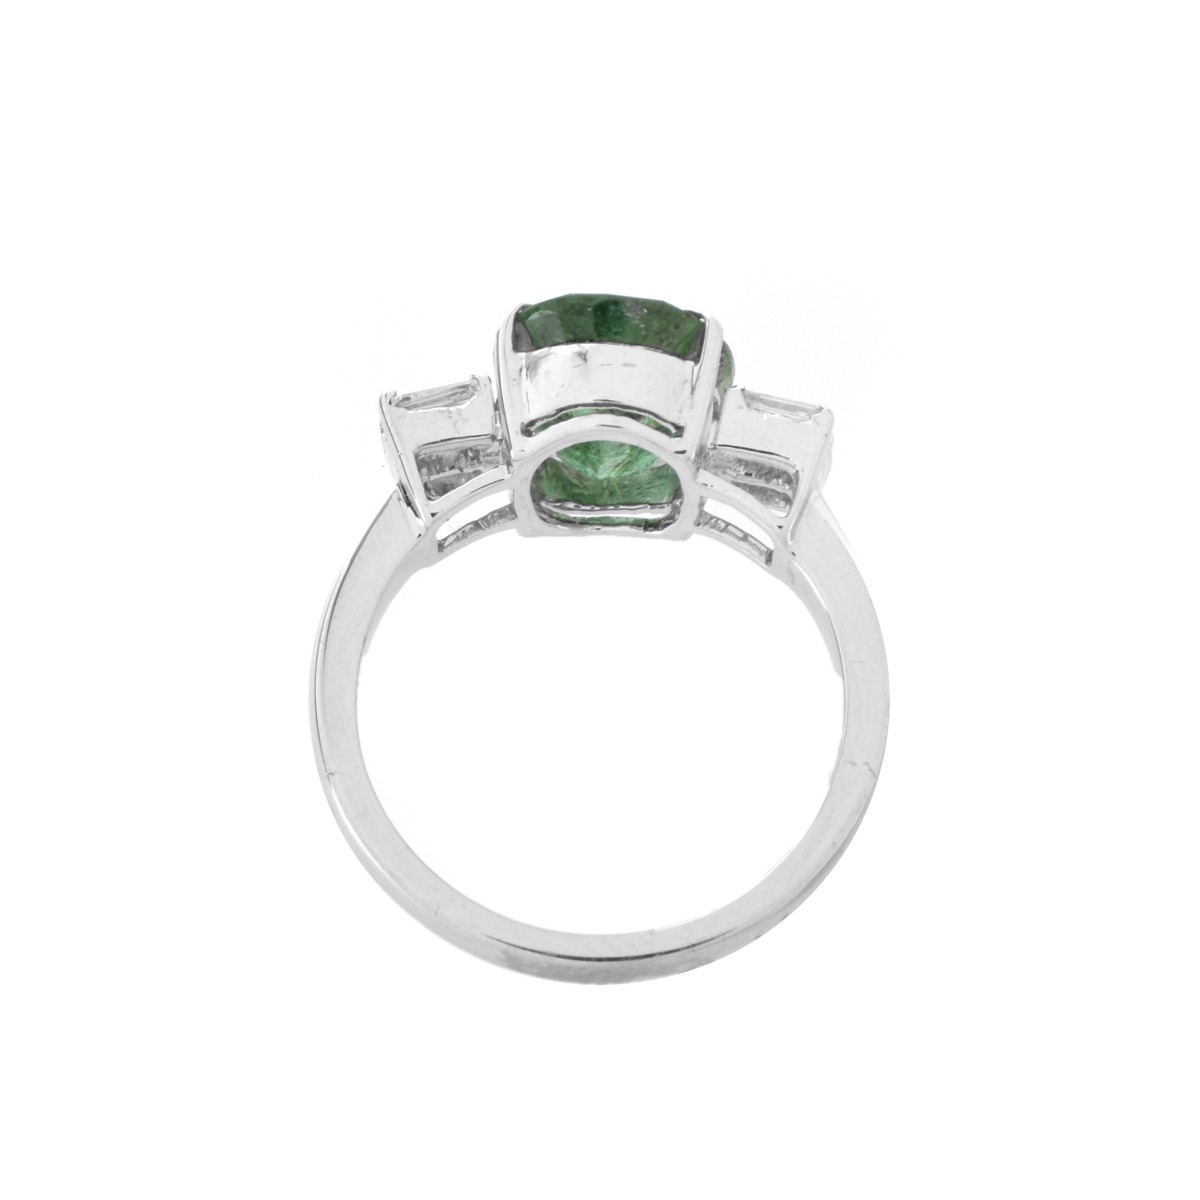 AGL Emerald, Diamond and 18K Ring